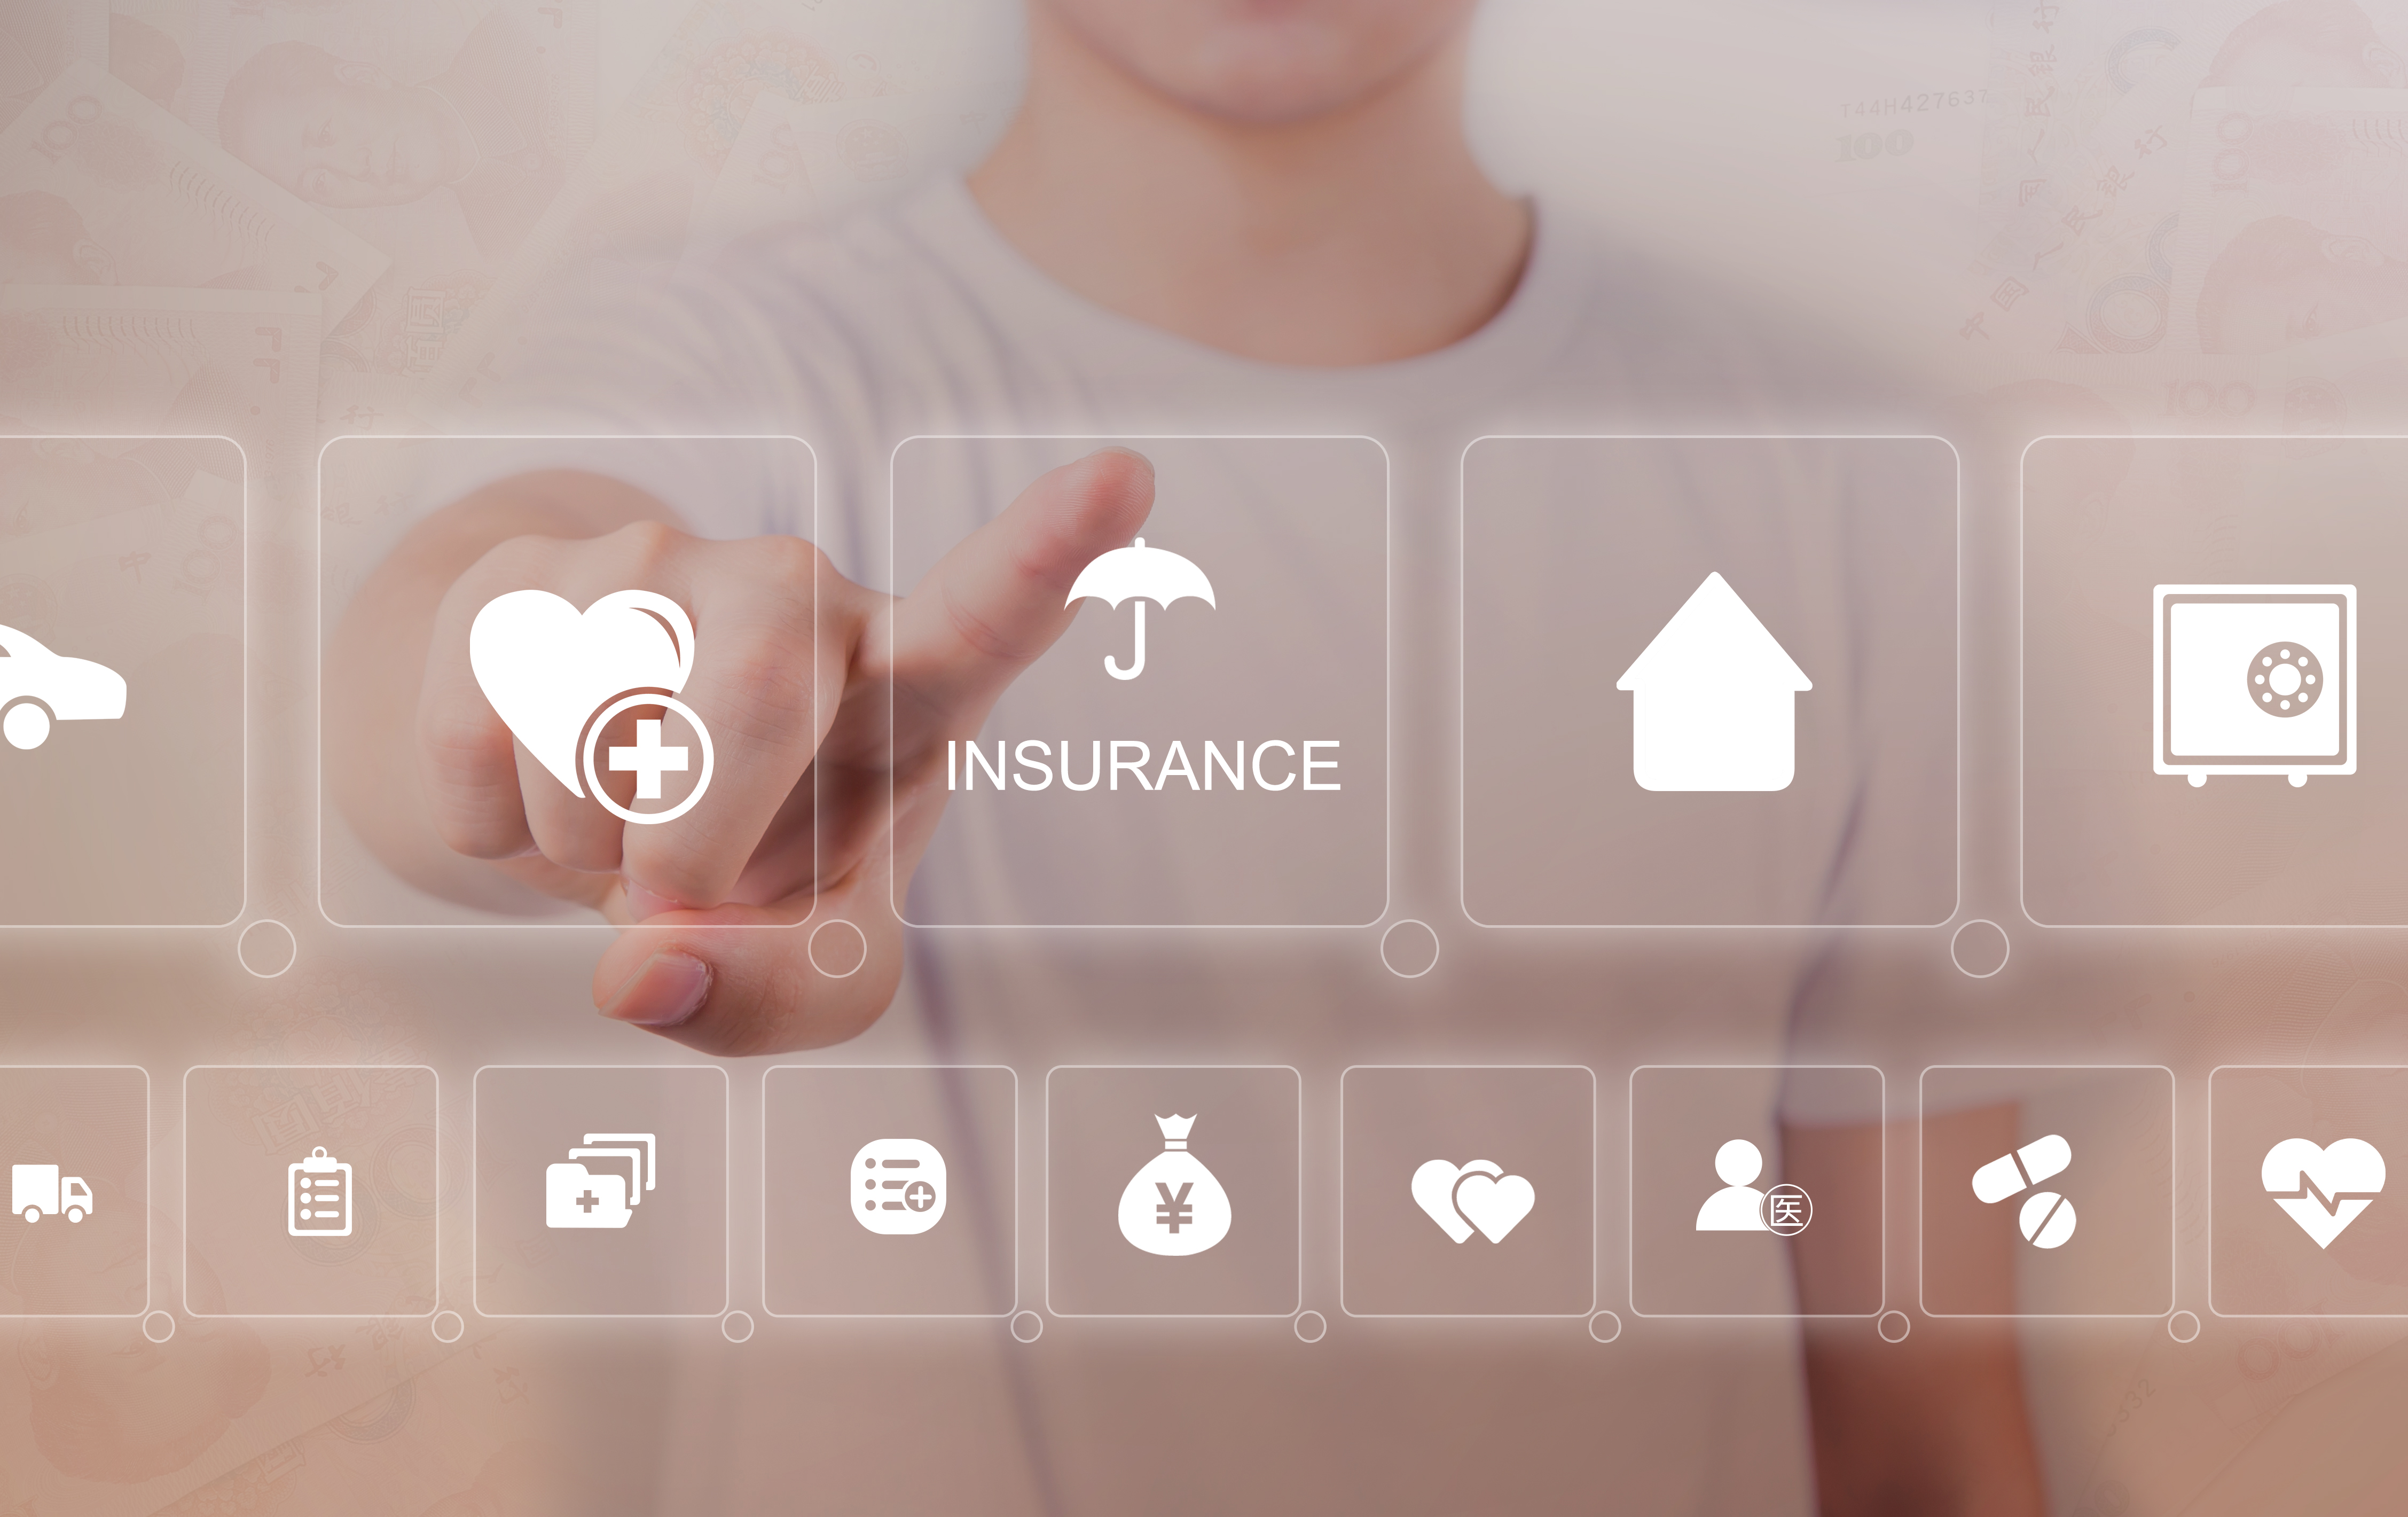 Insurance image business platform